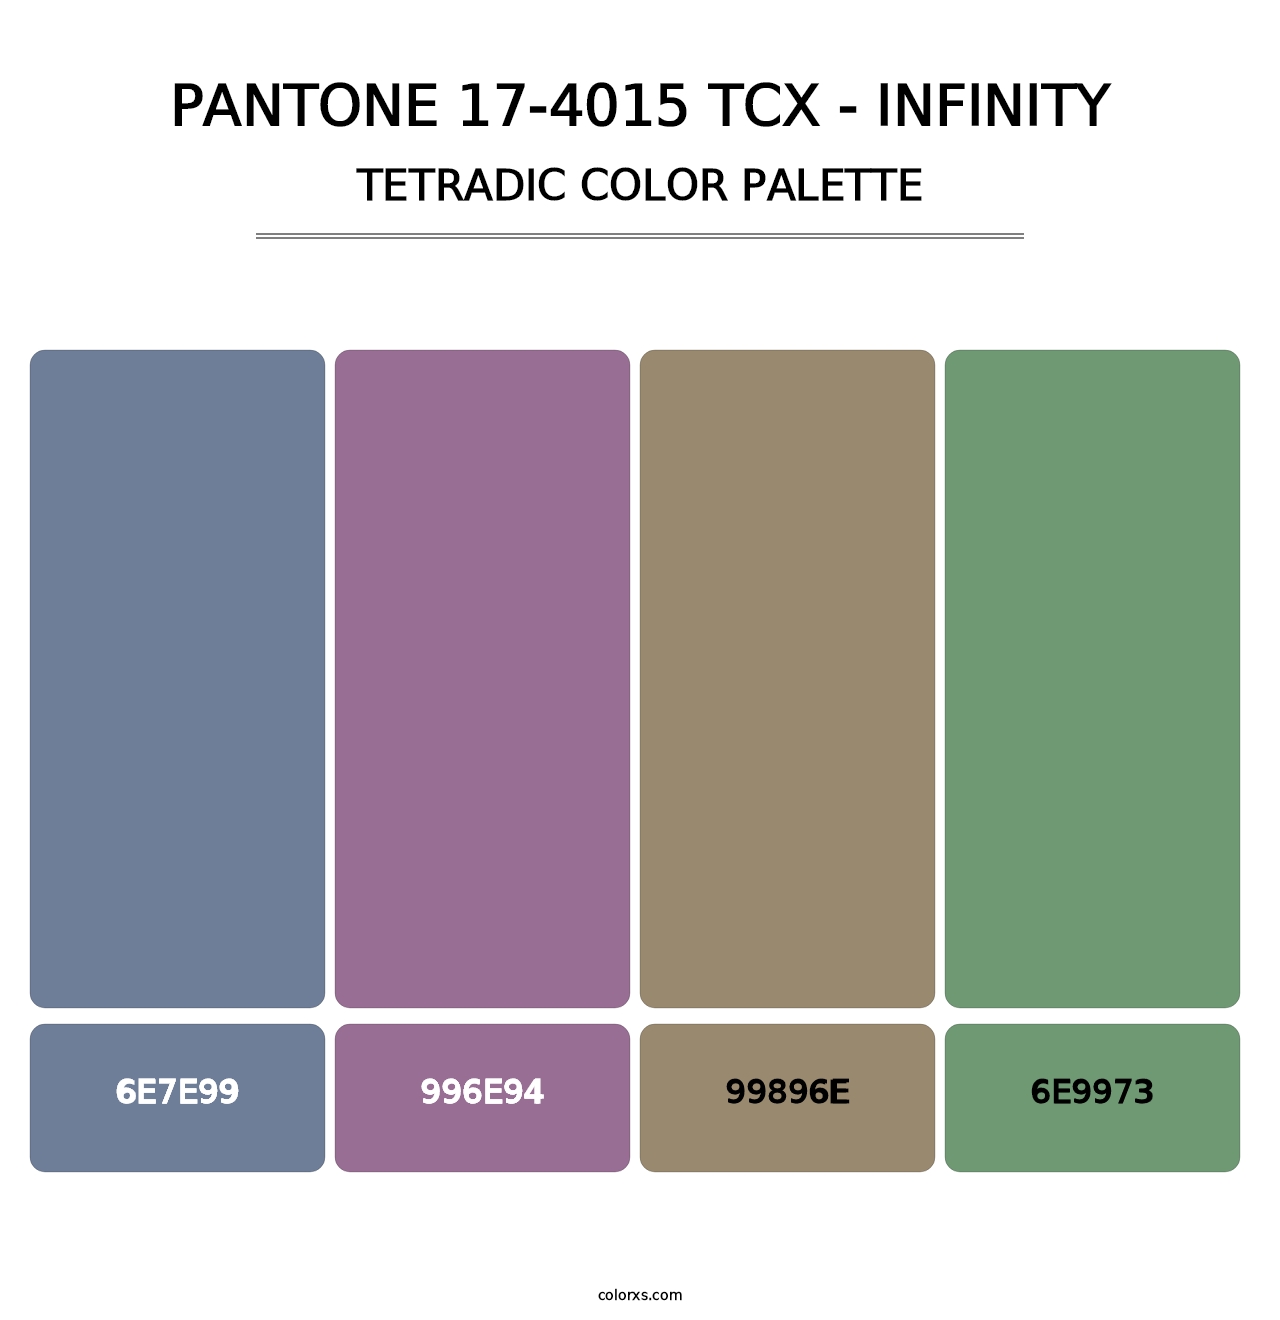 PANTONE 17-4015 TCX - Infinity - Tetradic Color Palette